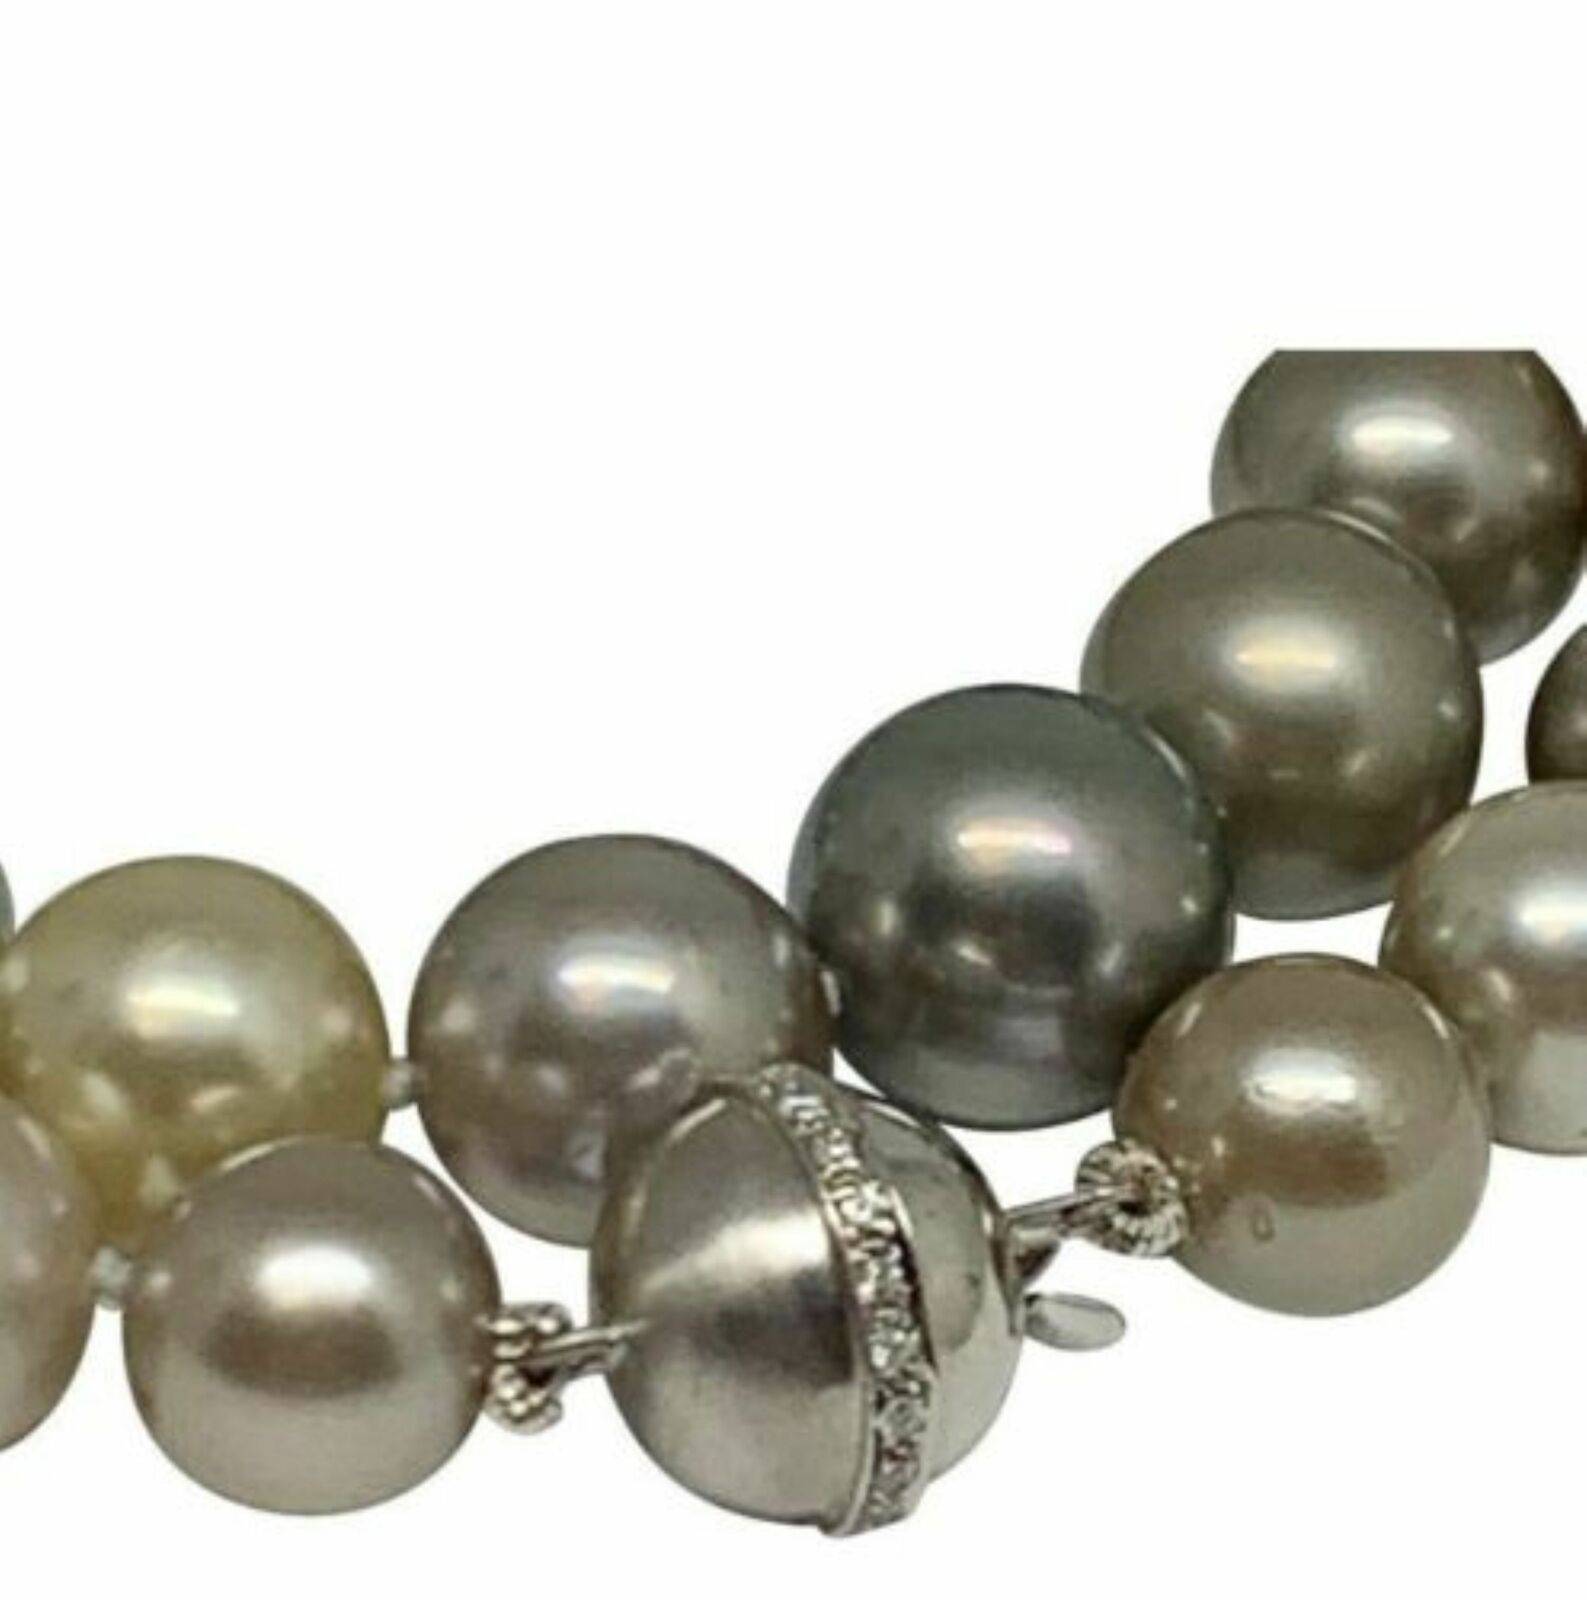 Diamond South Sea Pearl Necklace 14k Gold 11.46 mm 16.25" Certified $12,500 813013 - Certified Fine Jewelry